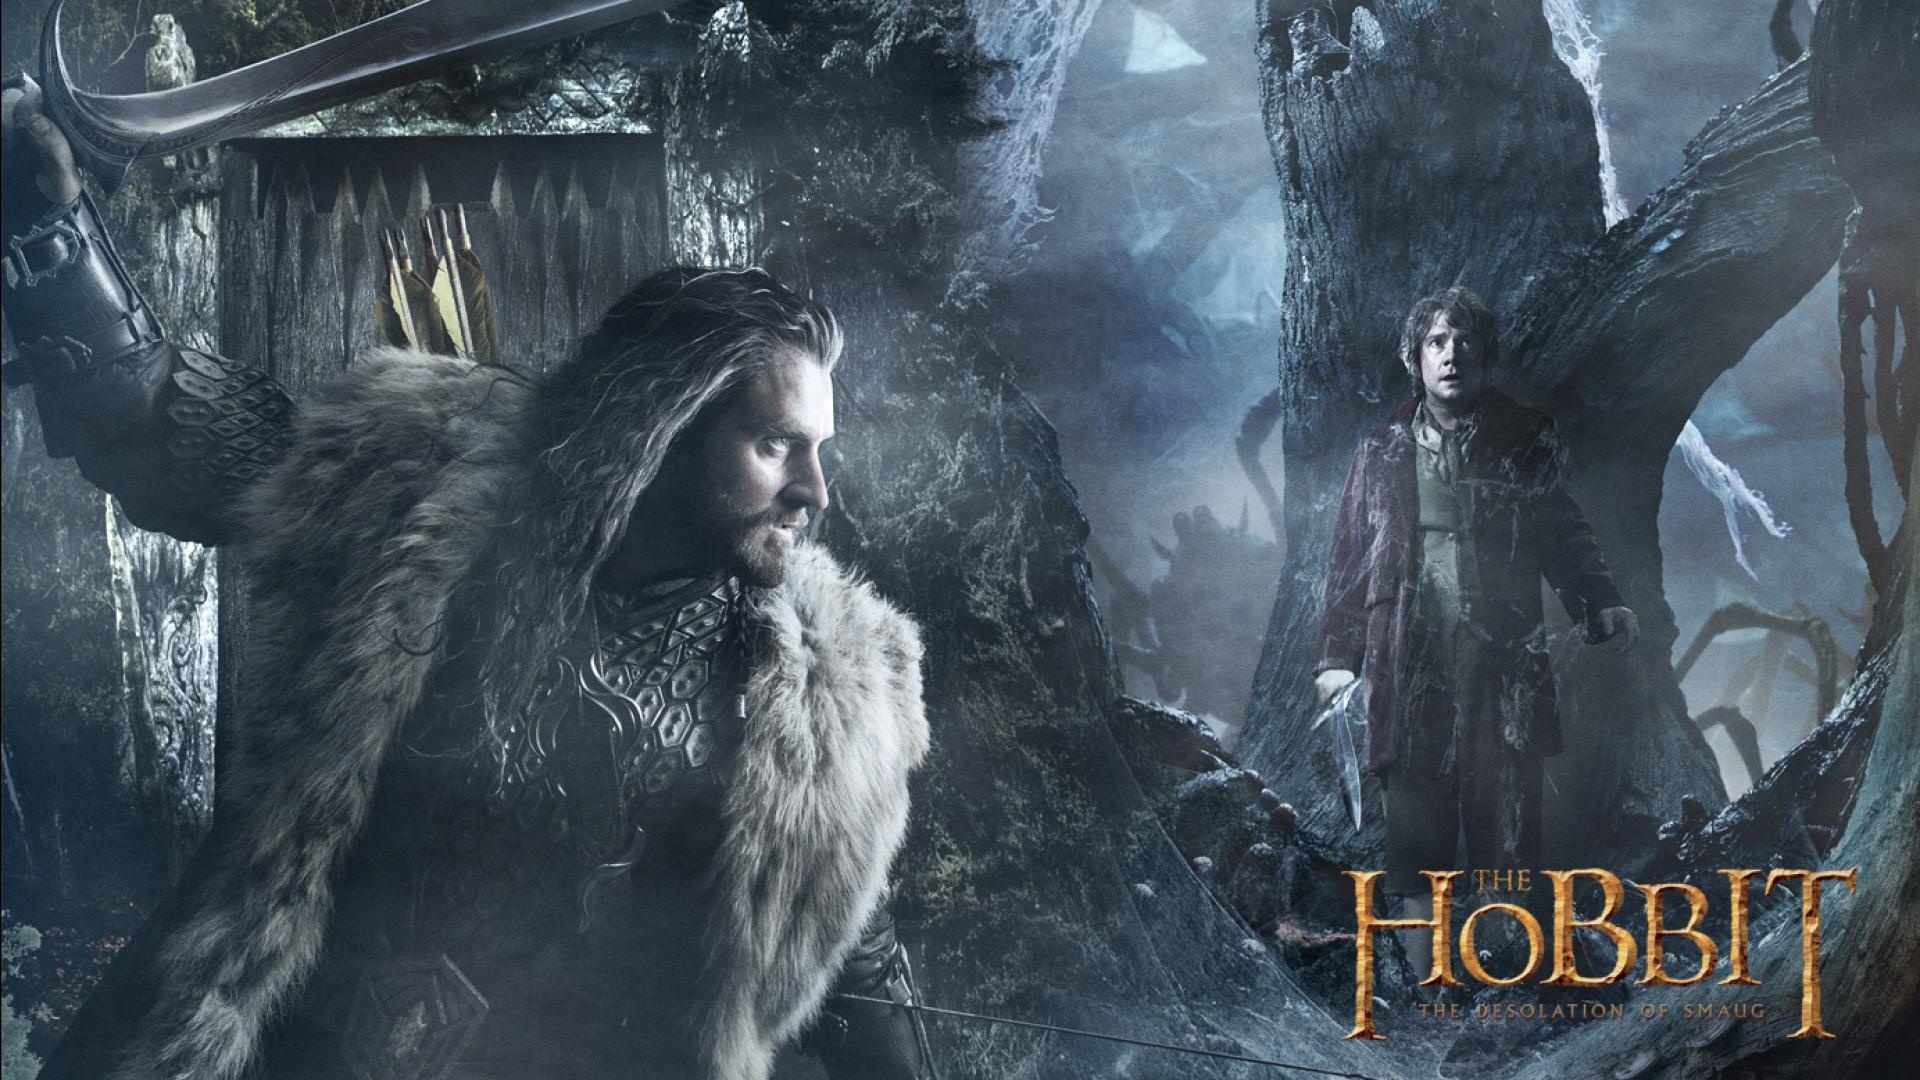 The Hobbit (Movie): Richard Armitage as Thorin Oakenshield II, Bilbo Baggins. 1920x1080 Full HD Background.